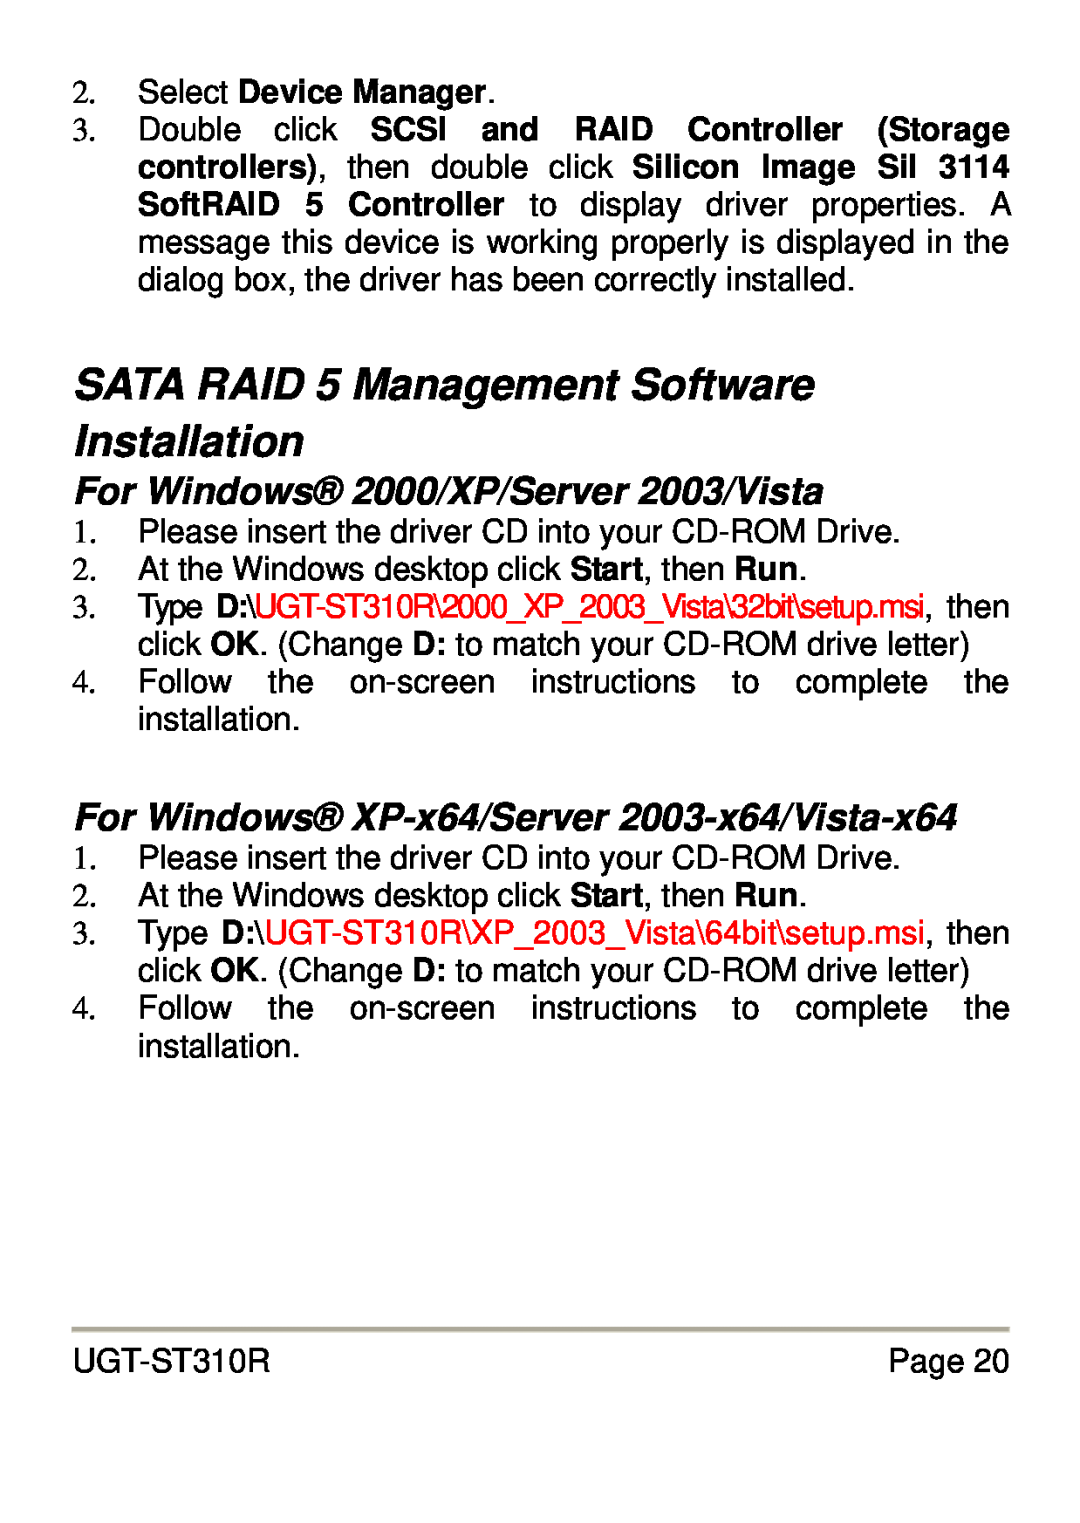 Vantec UGT-ST310R user manual SATA RAID 5 Management Software Installation, For Windows 2000/XP/Server 2003/Vista 